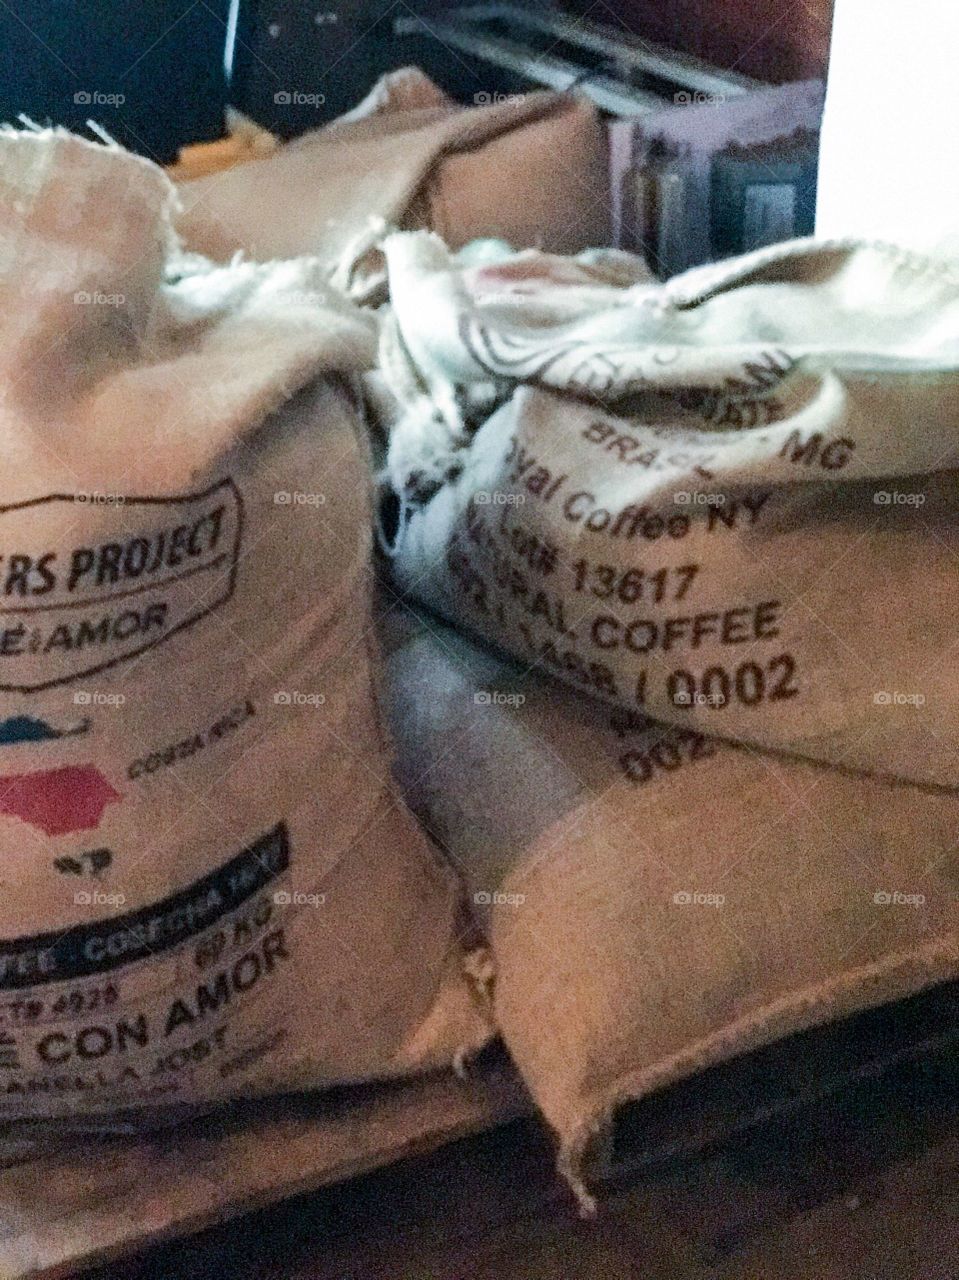 Croaker sacks of coffee beans 